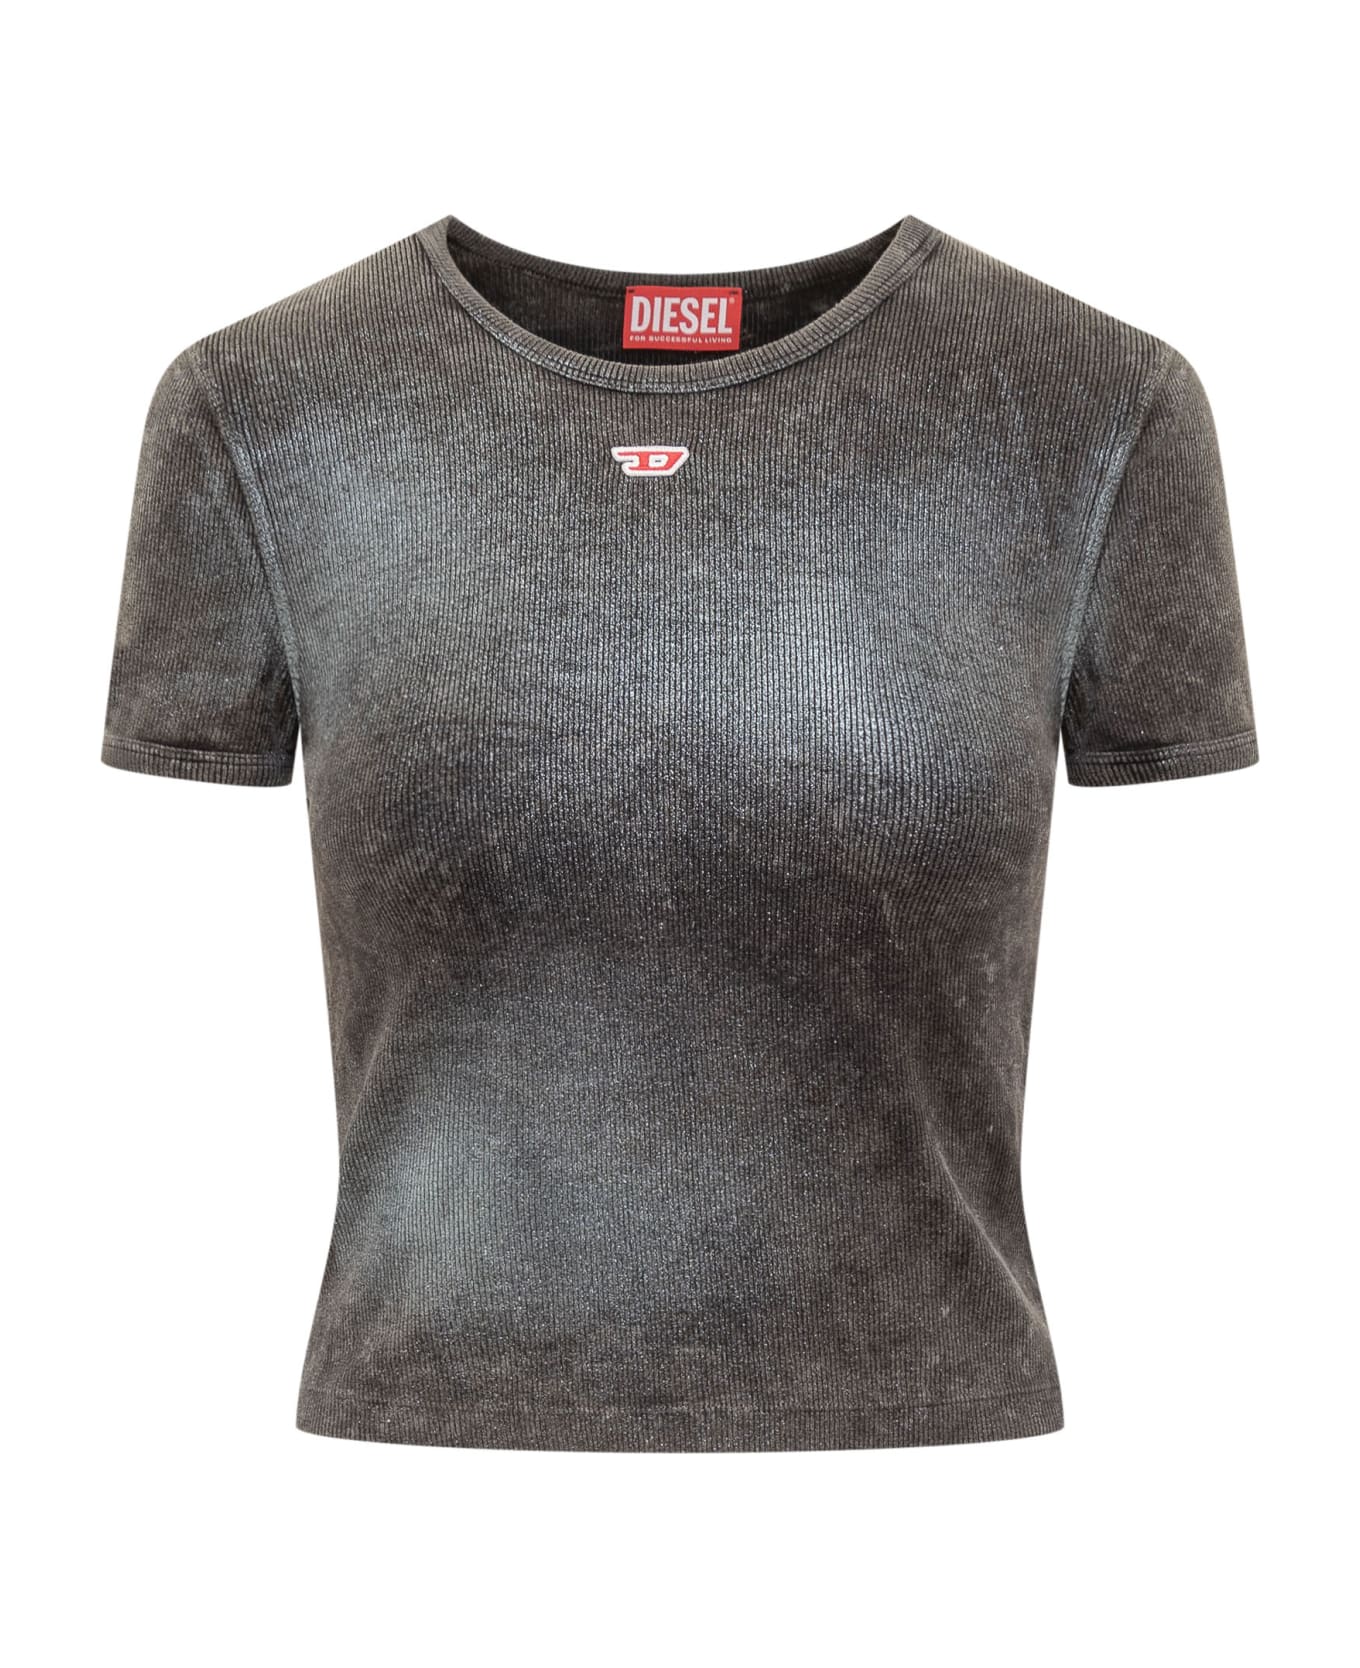 Diesel T-elen1 T-shirt - Grey